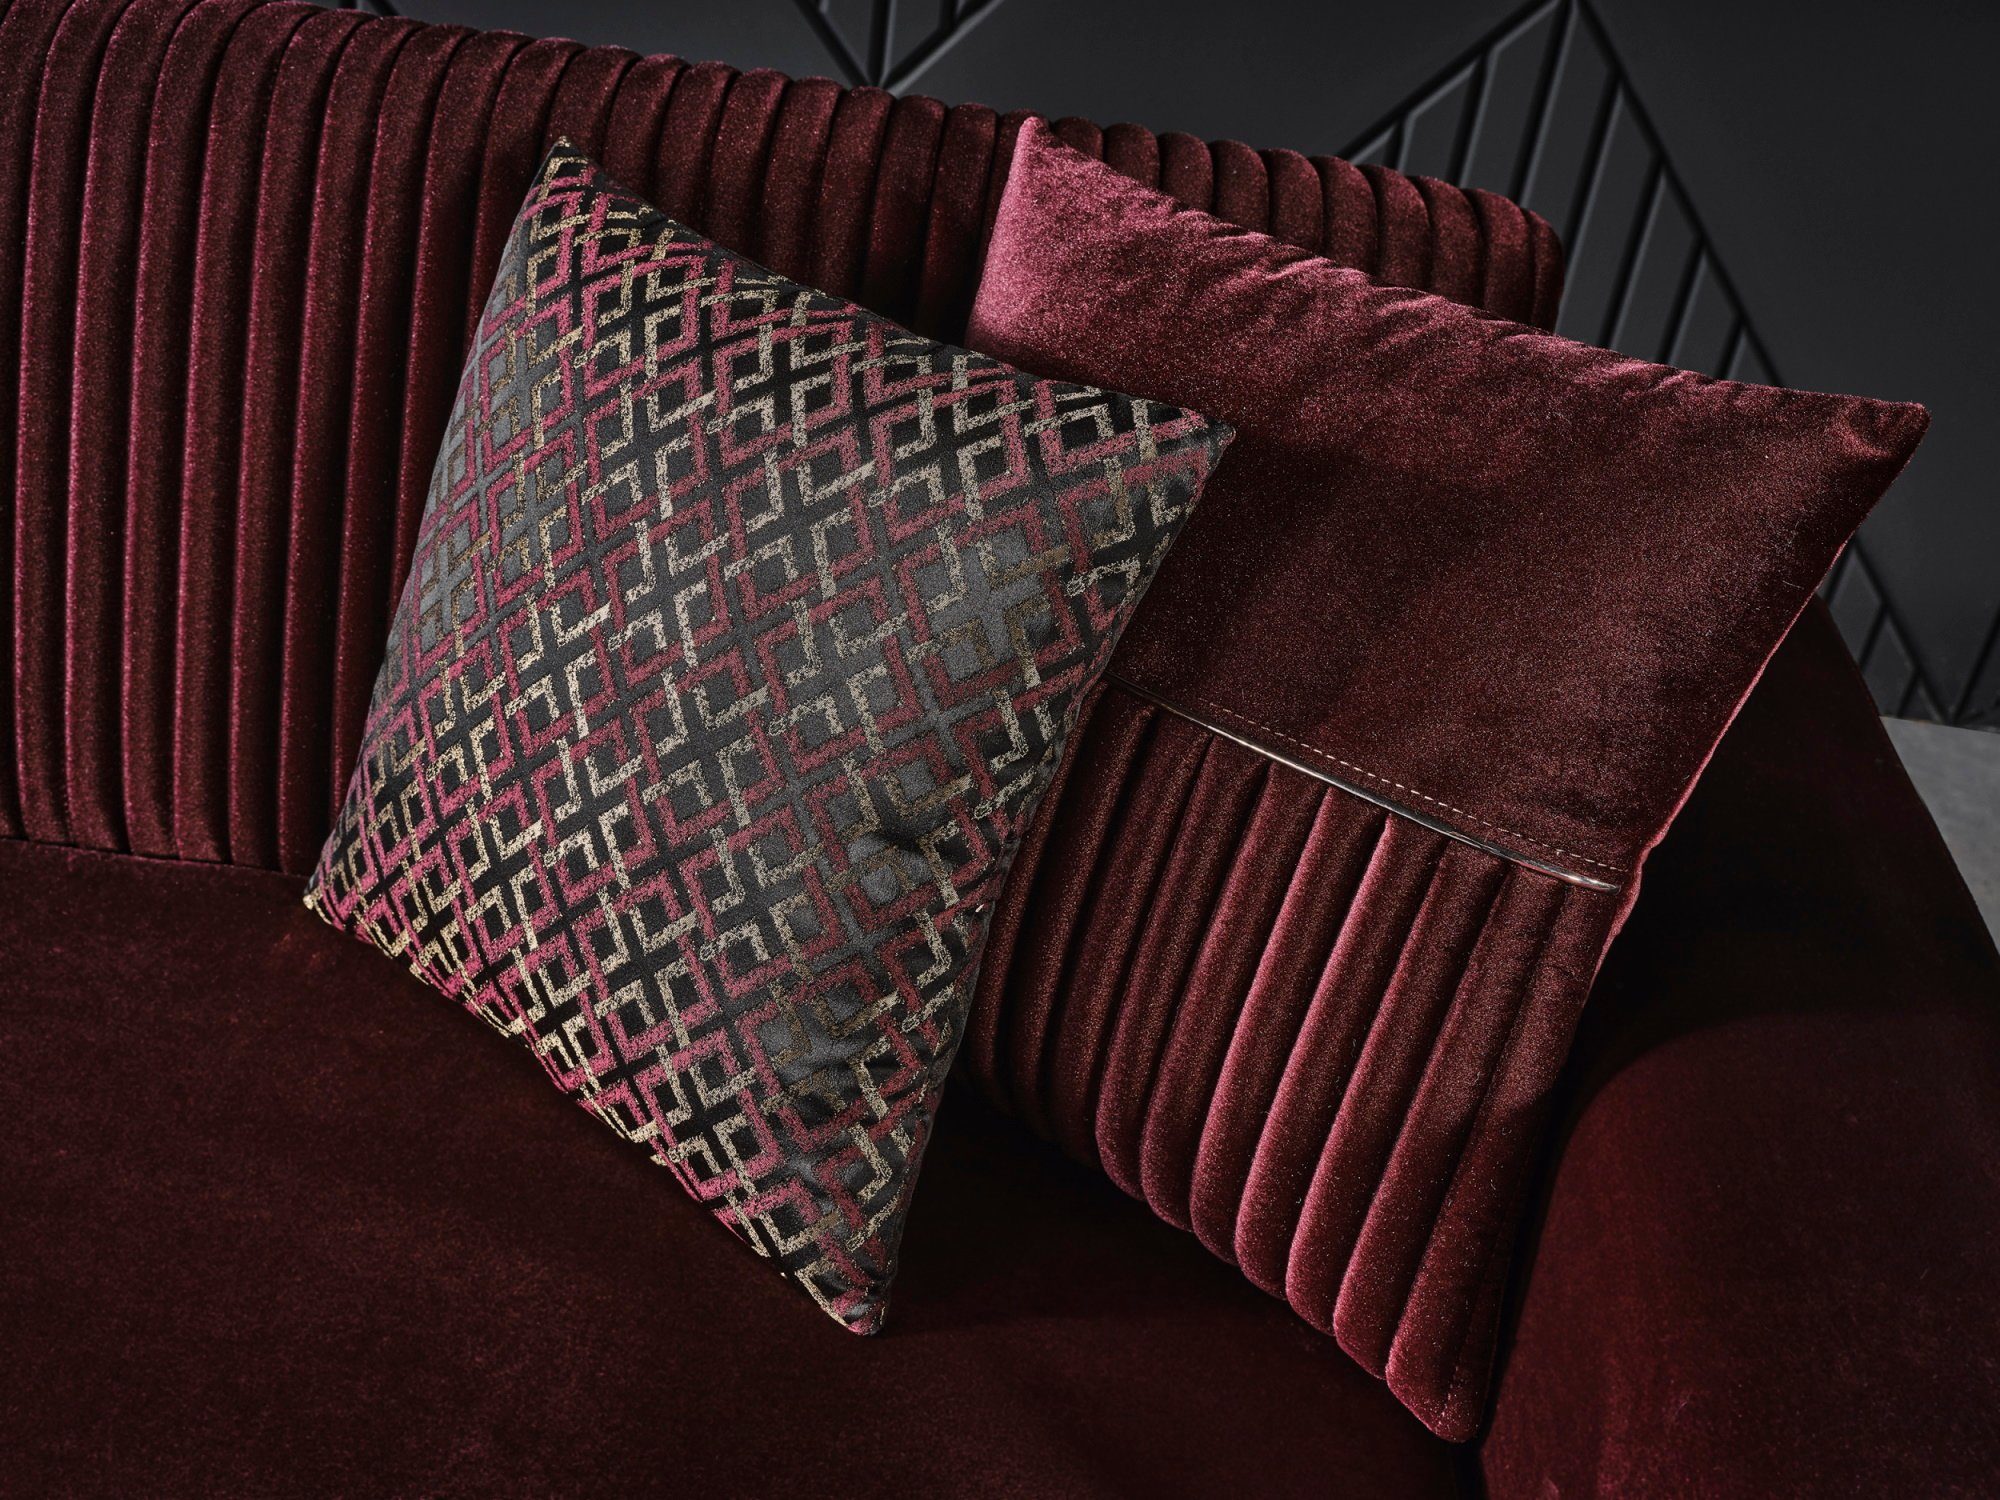 Handmade Sofa Quality,strapazierfähiger Cusco, Bordeaux 1 Mikrofaser Villa Rot Teil, Samtstoff Möbel